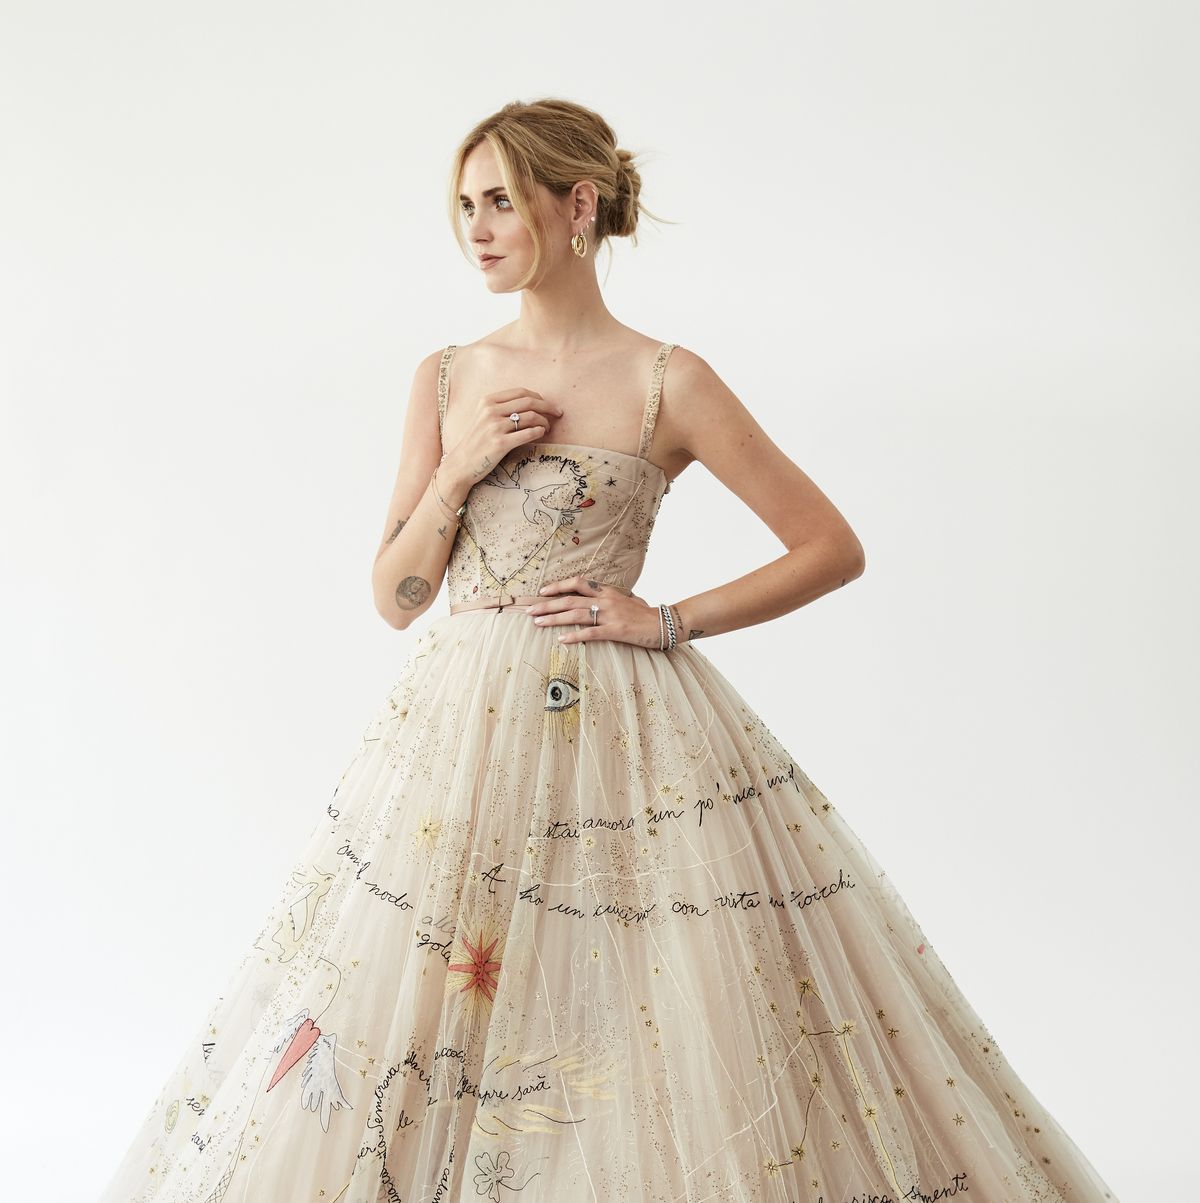 Mini lady Dior to weddings?